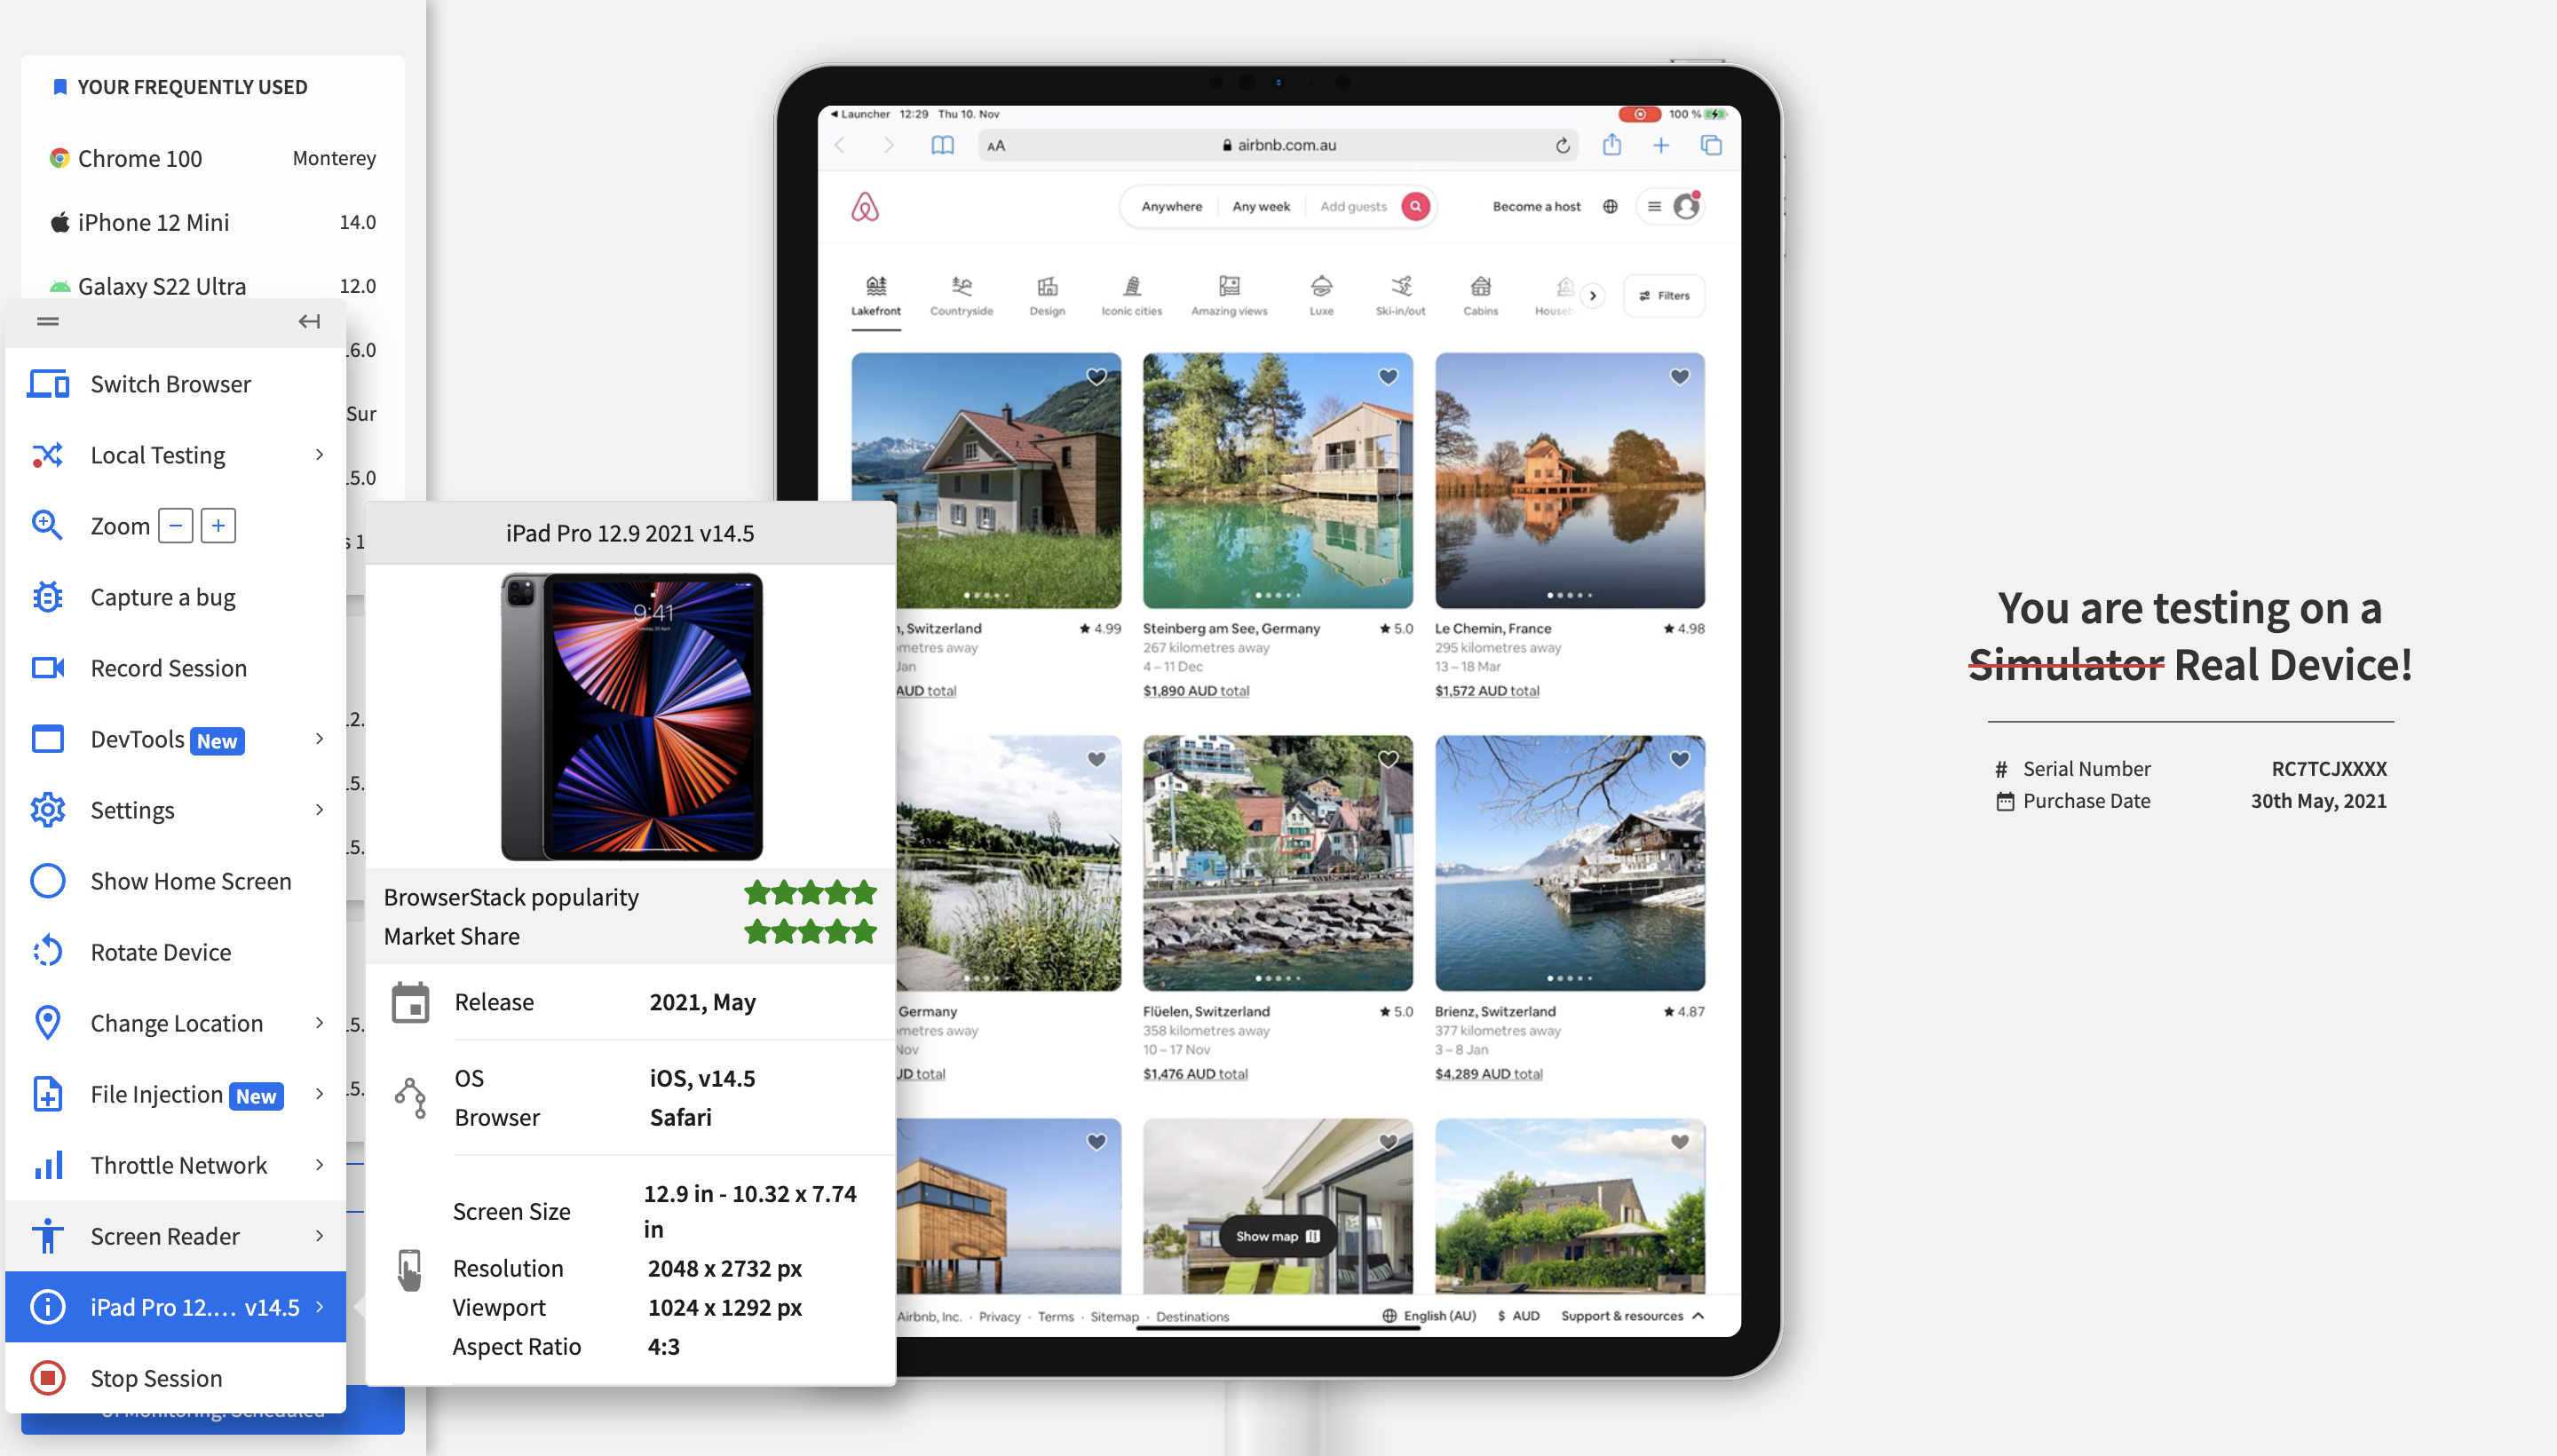 React browser compatibility on iPad Pro Safari